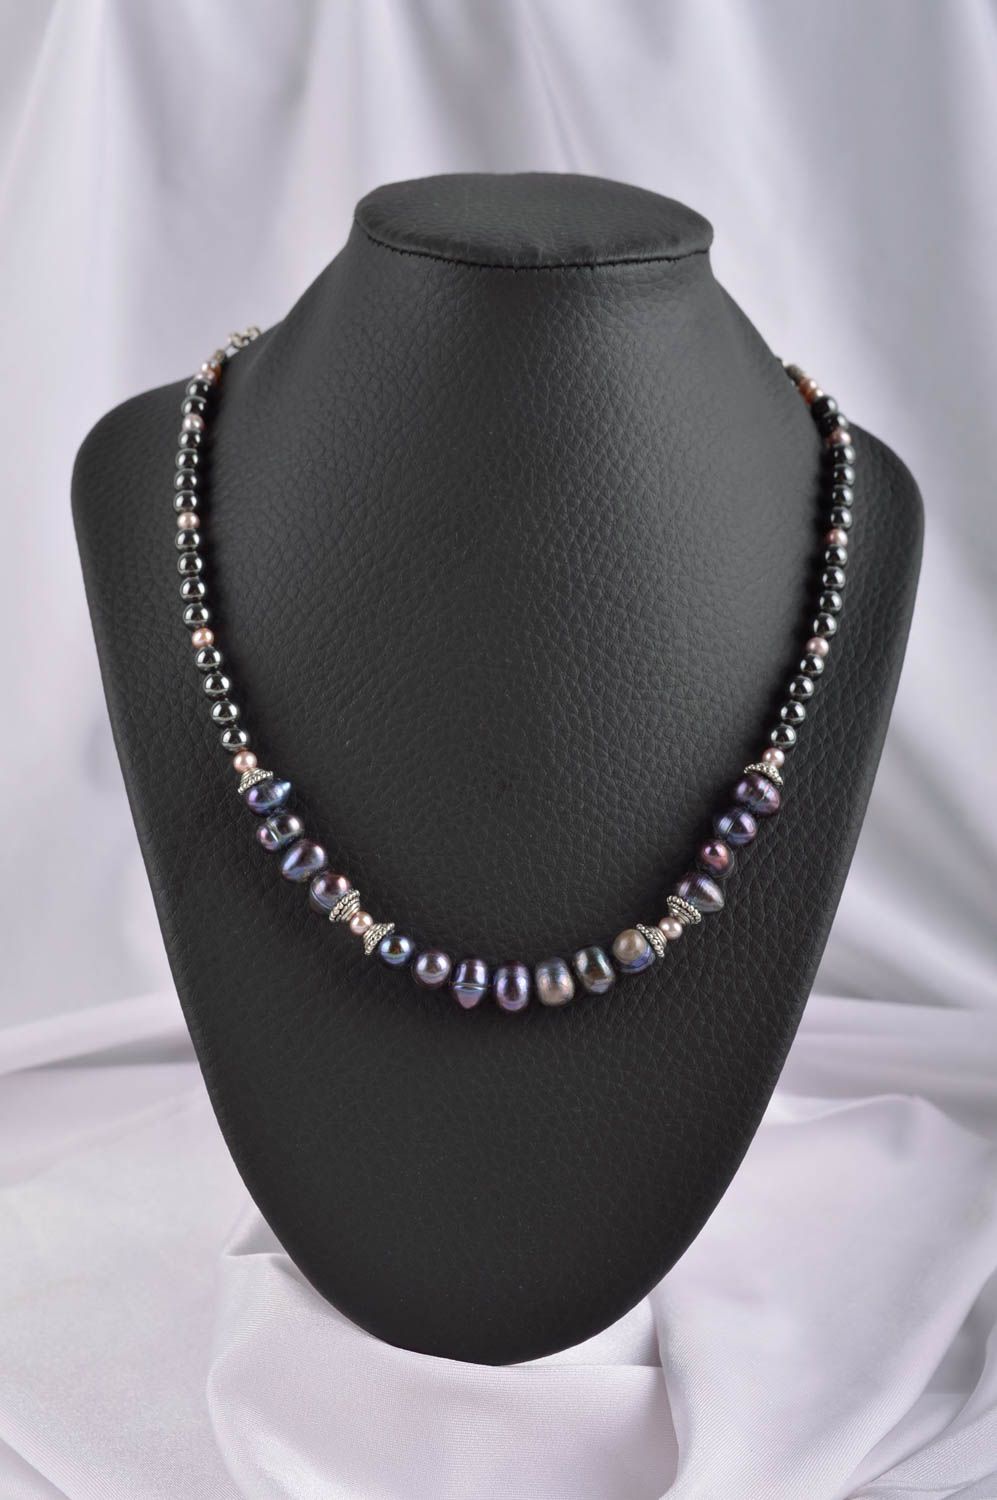 Handmade necklace pearl jewelry designer accessories gemstone jewelry gift ideas photo 1